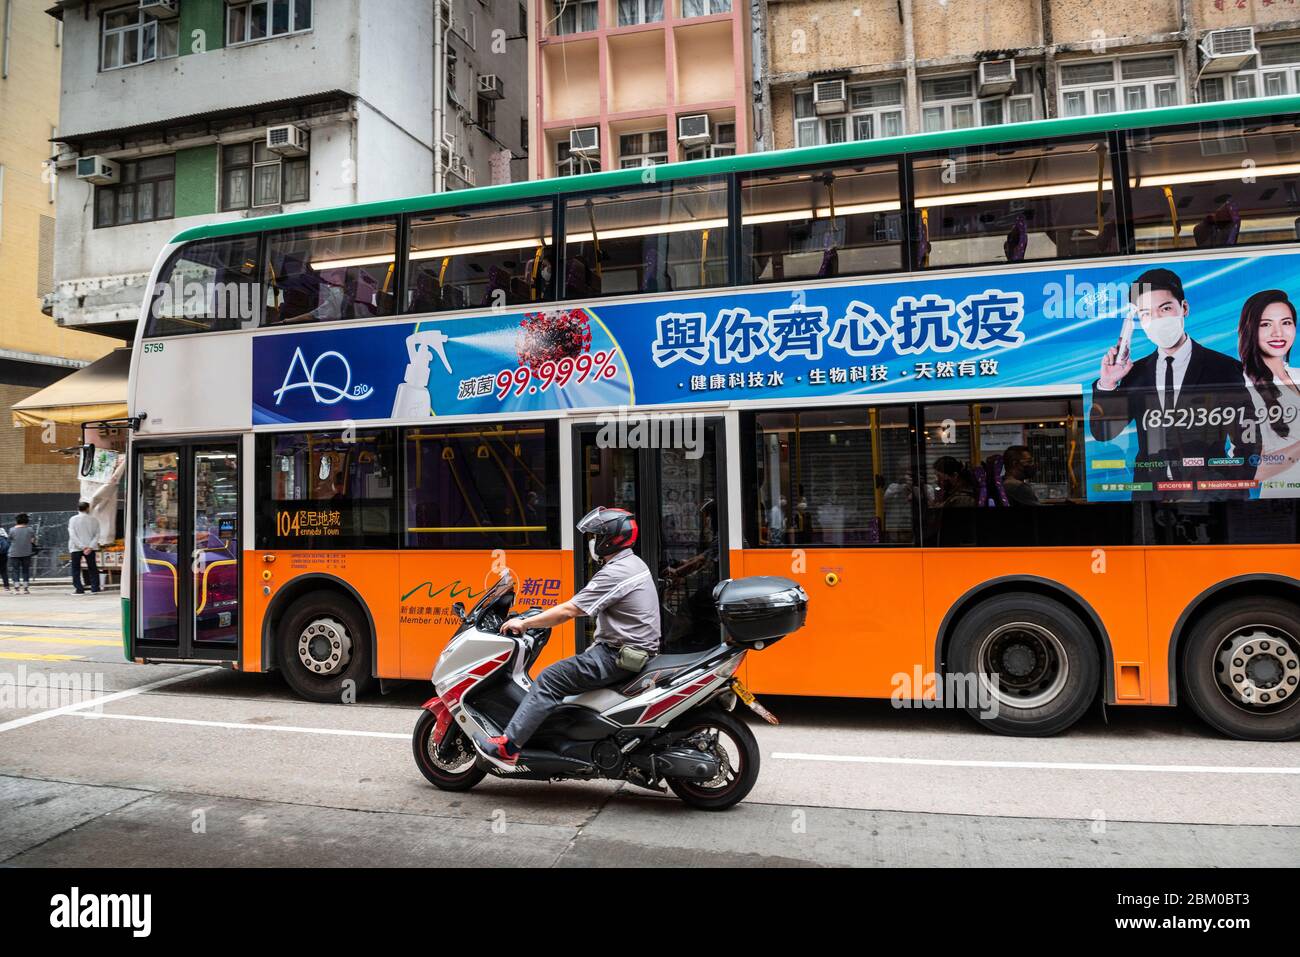 Hong Kong, 11 aprile 2020 autobus con pubblicità per i desinfectanti per combattere l'infezione da virus corona. Steeds meer si ribatte in het openbaar vervoer e. Foto Stock